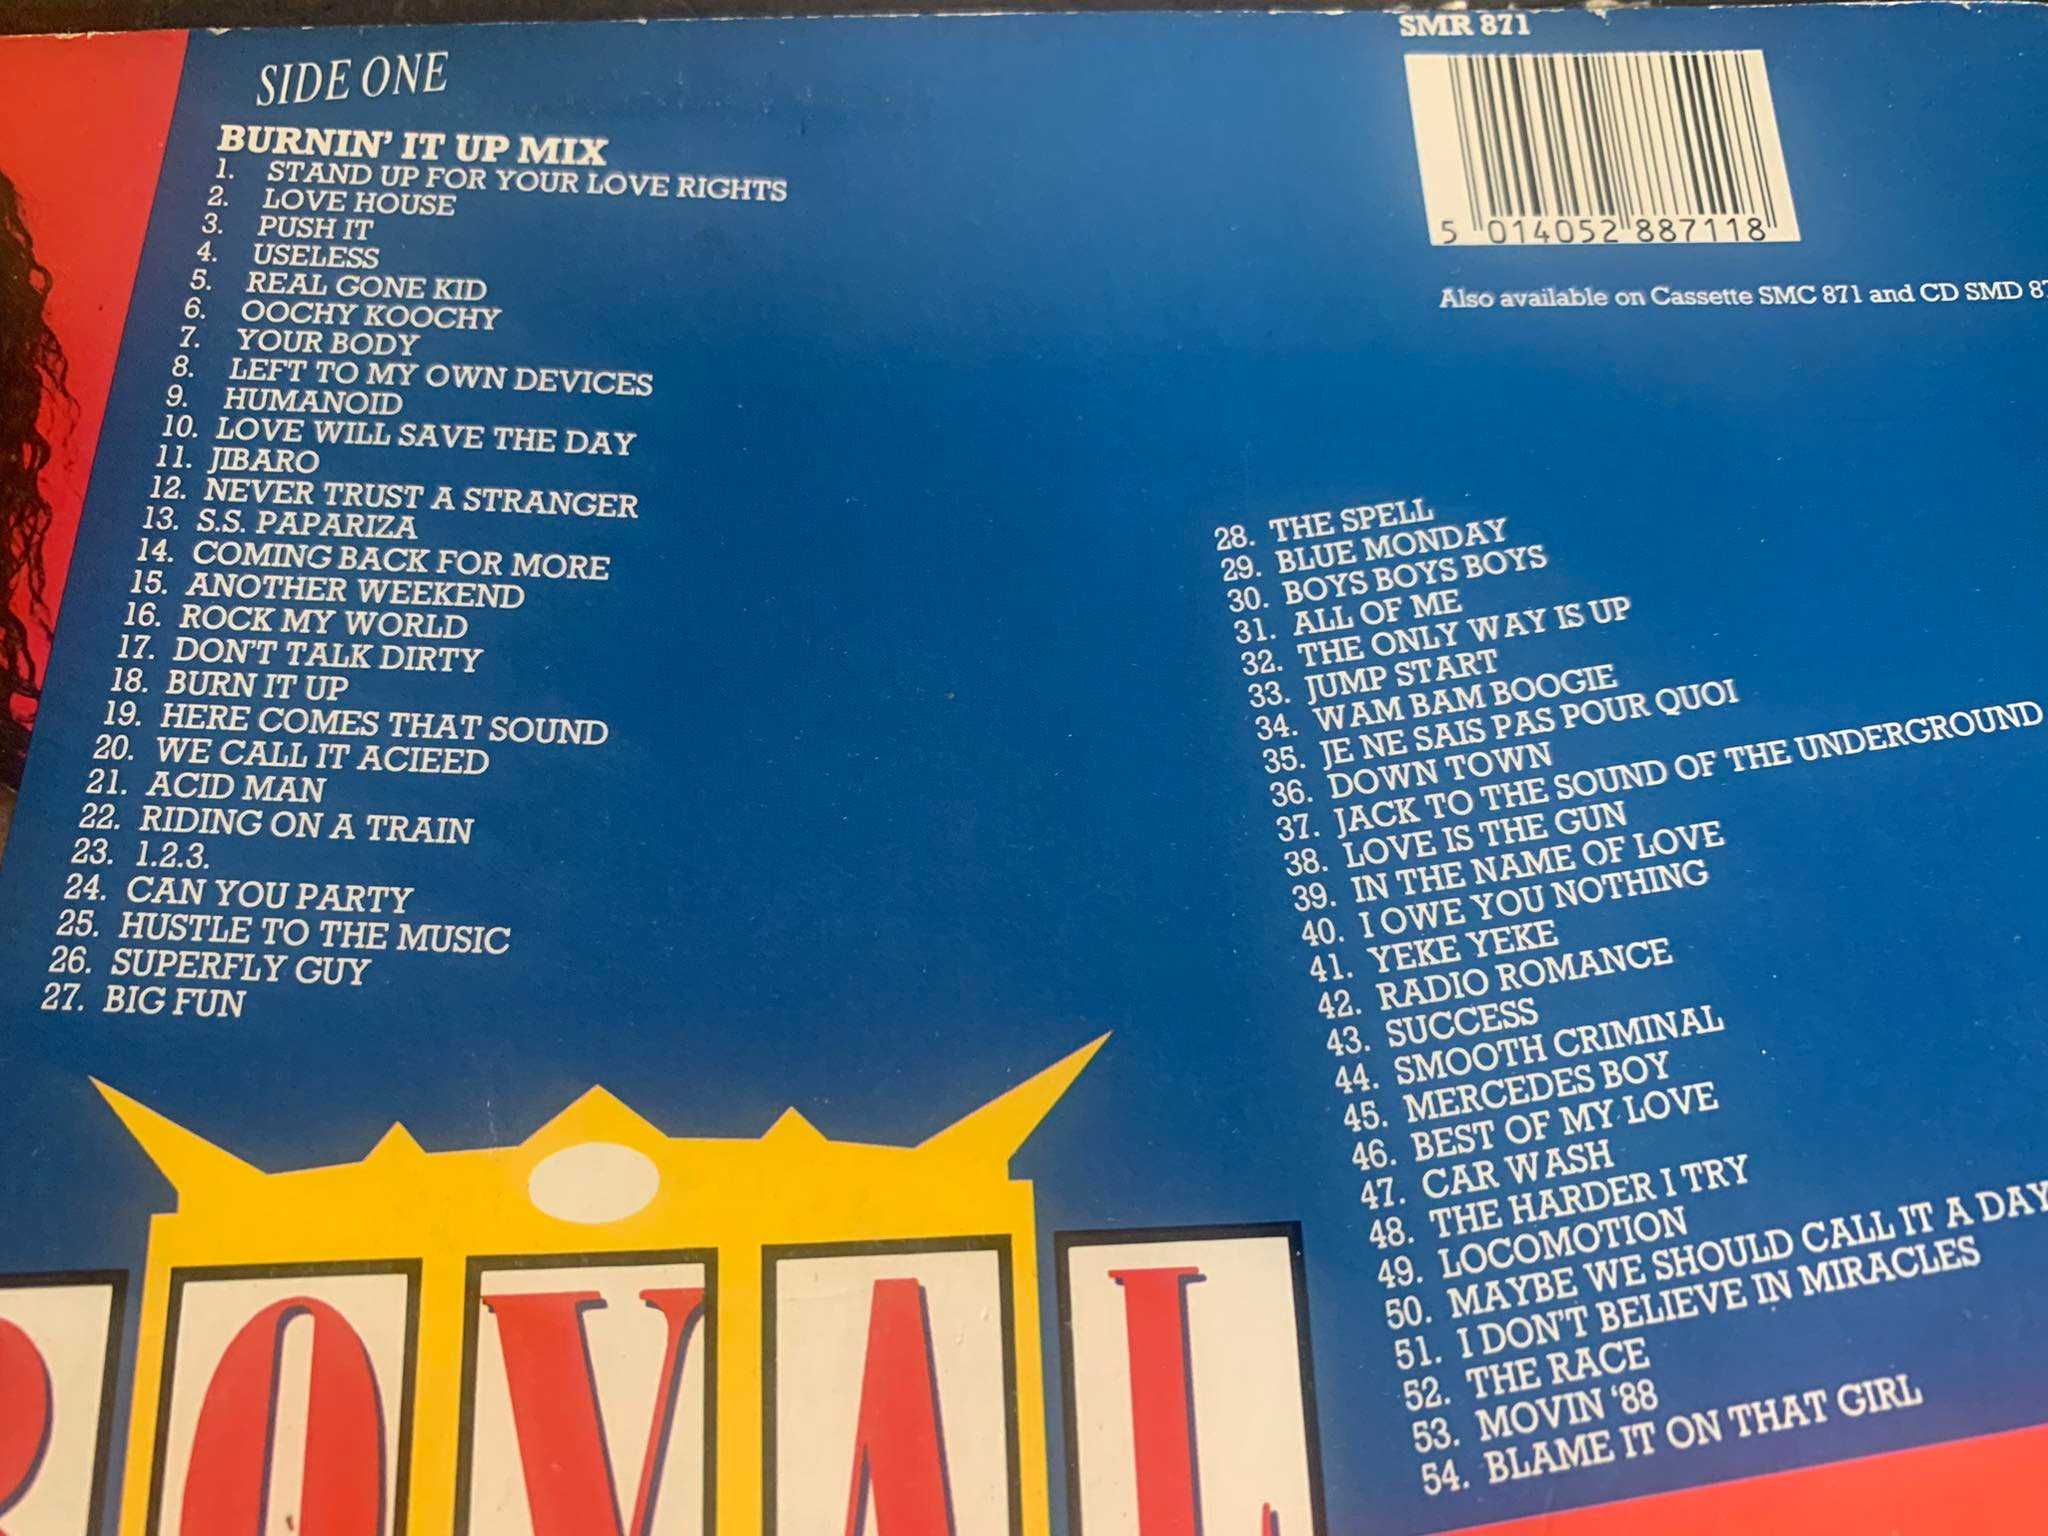 Mirage - Royal Mix'89 - Winyl - stan EX!